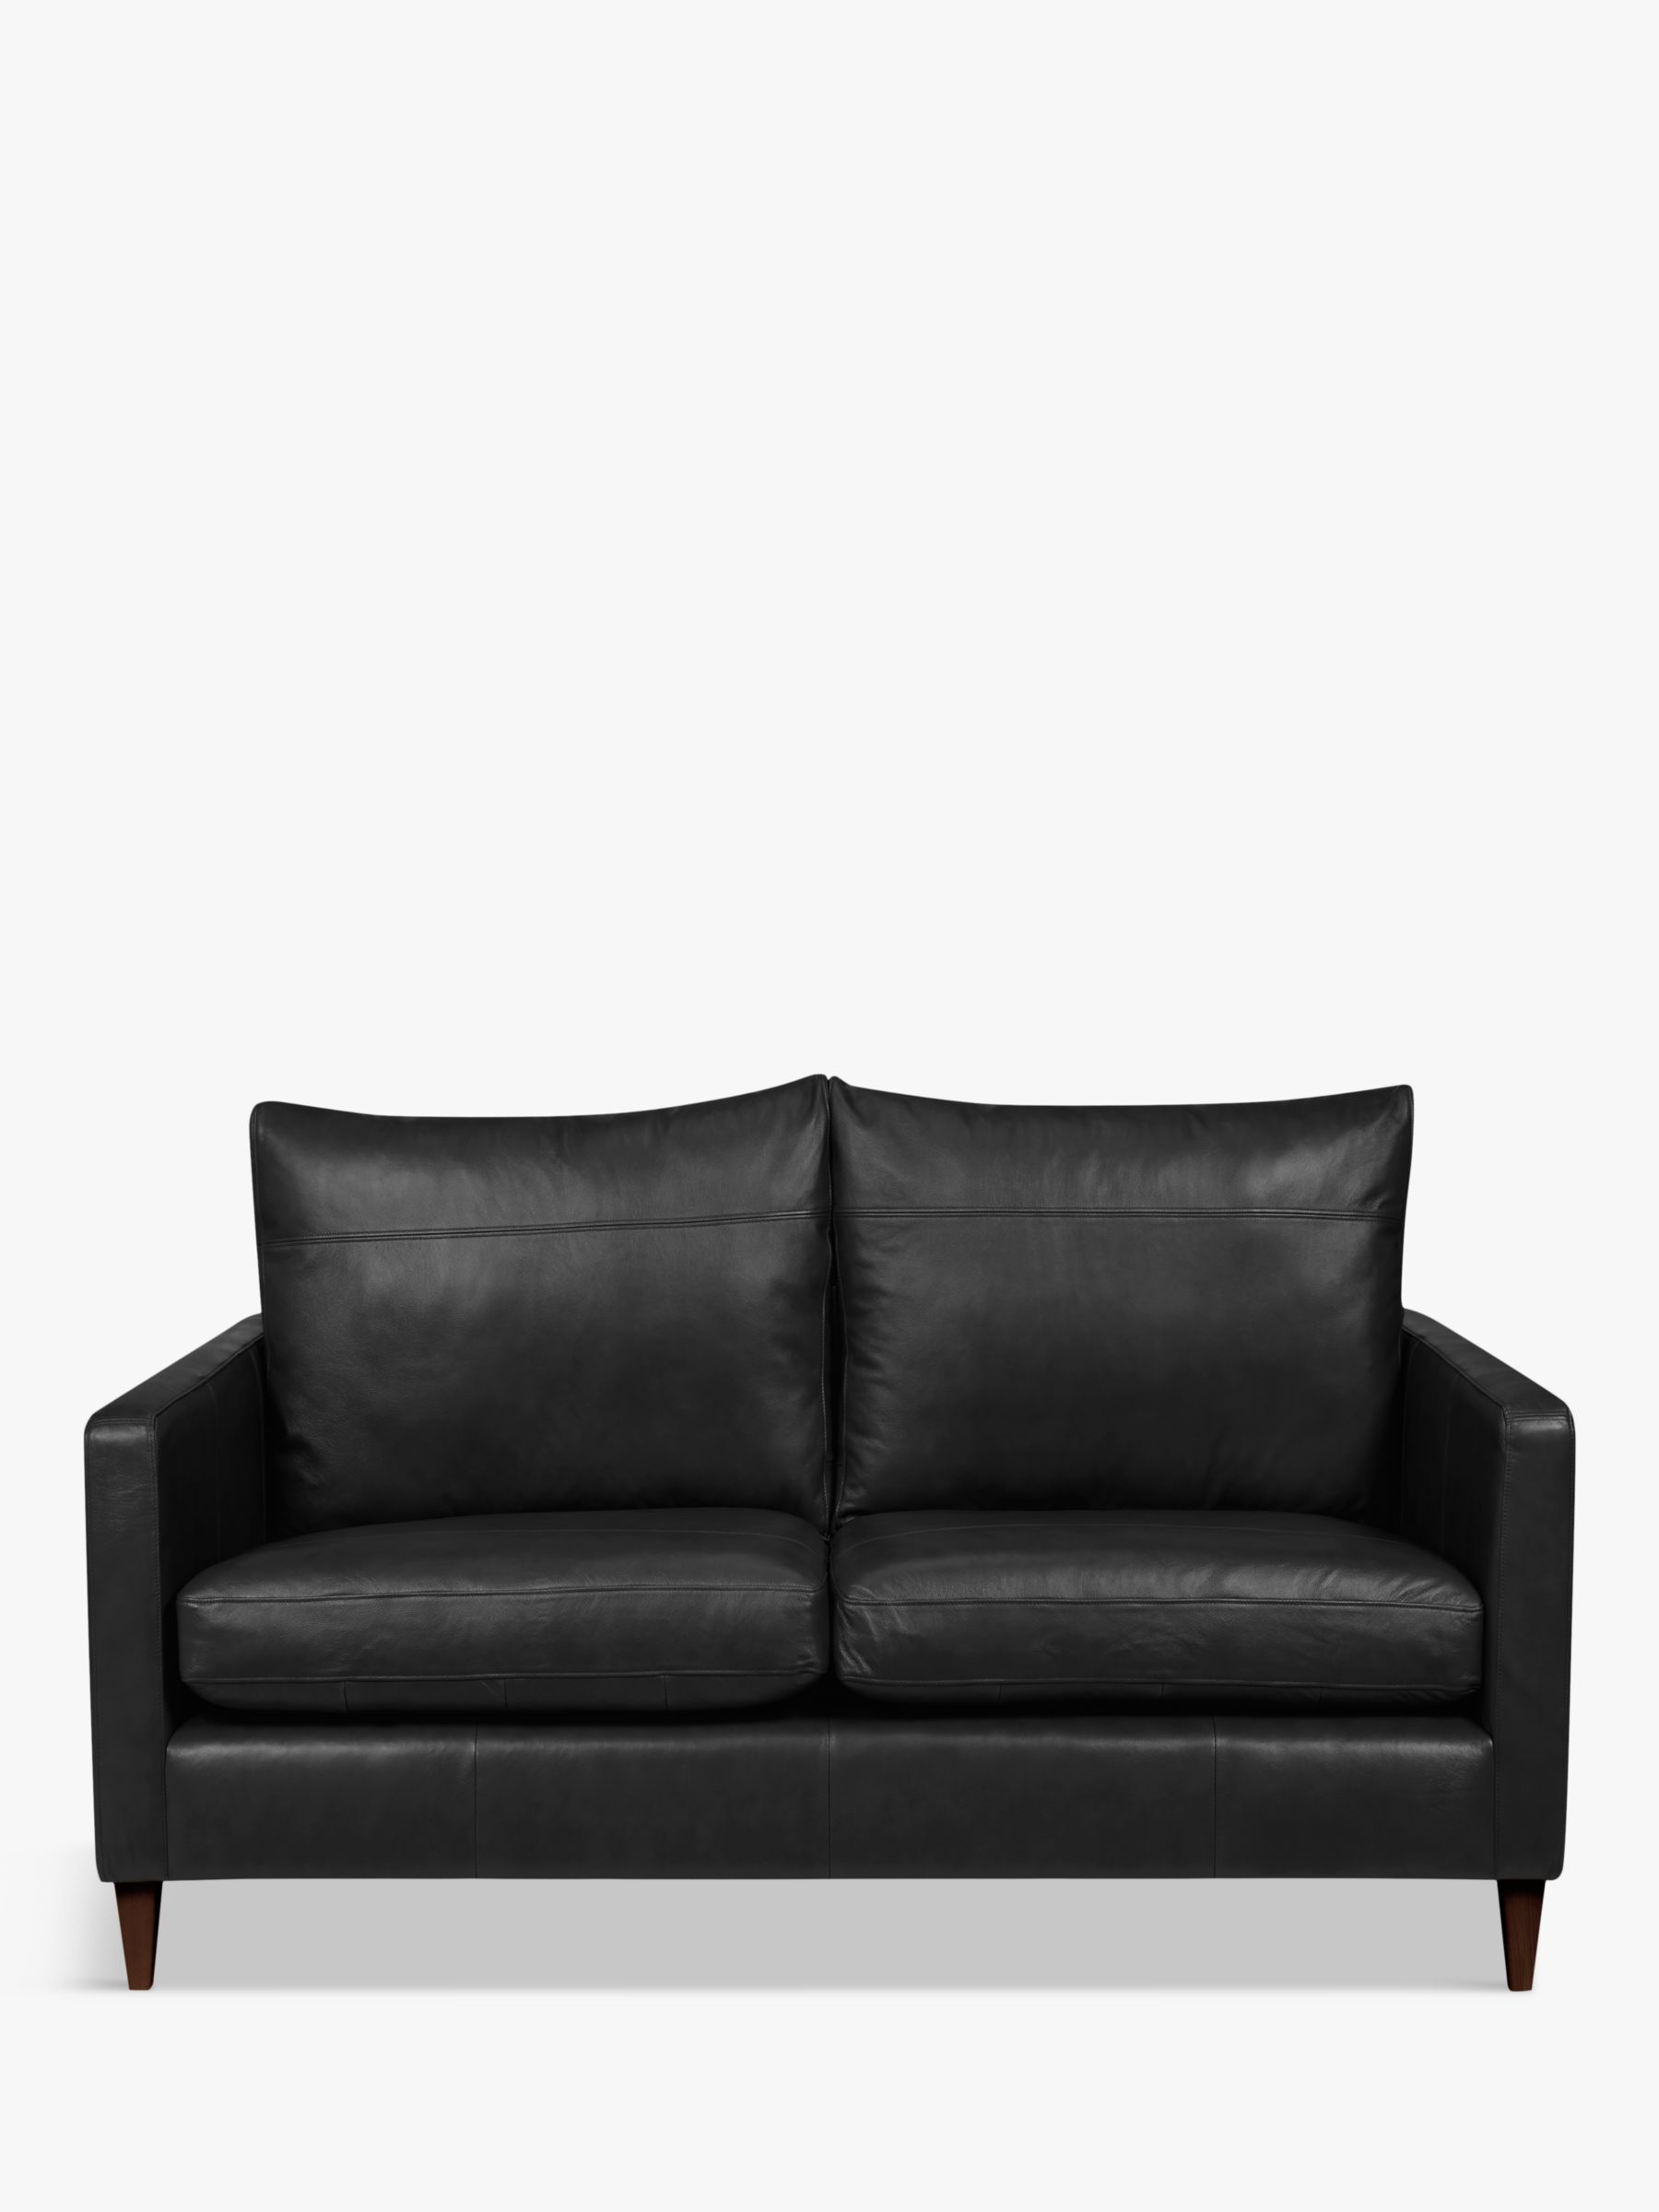 Bailey Range, John Lewis Bailey Small 2 Seater Leather Sofa, Dark Leg, Contempo Black